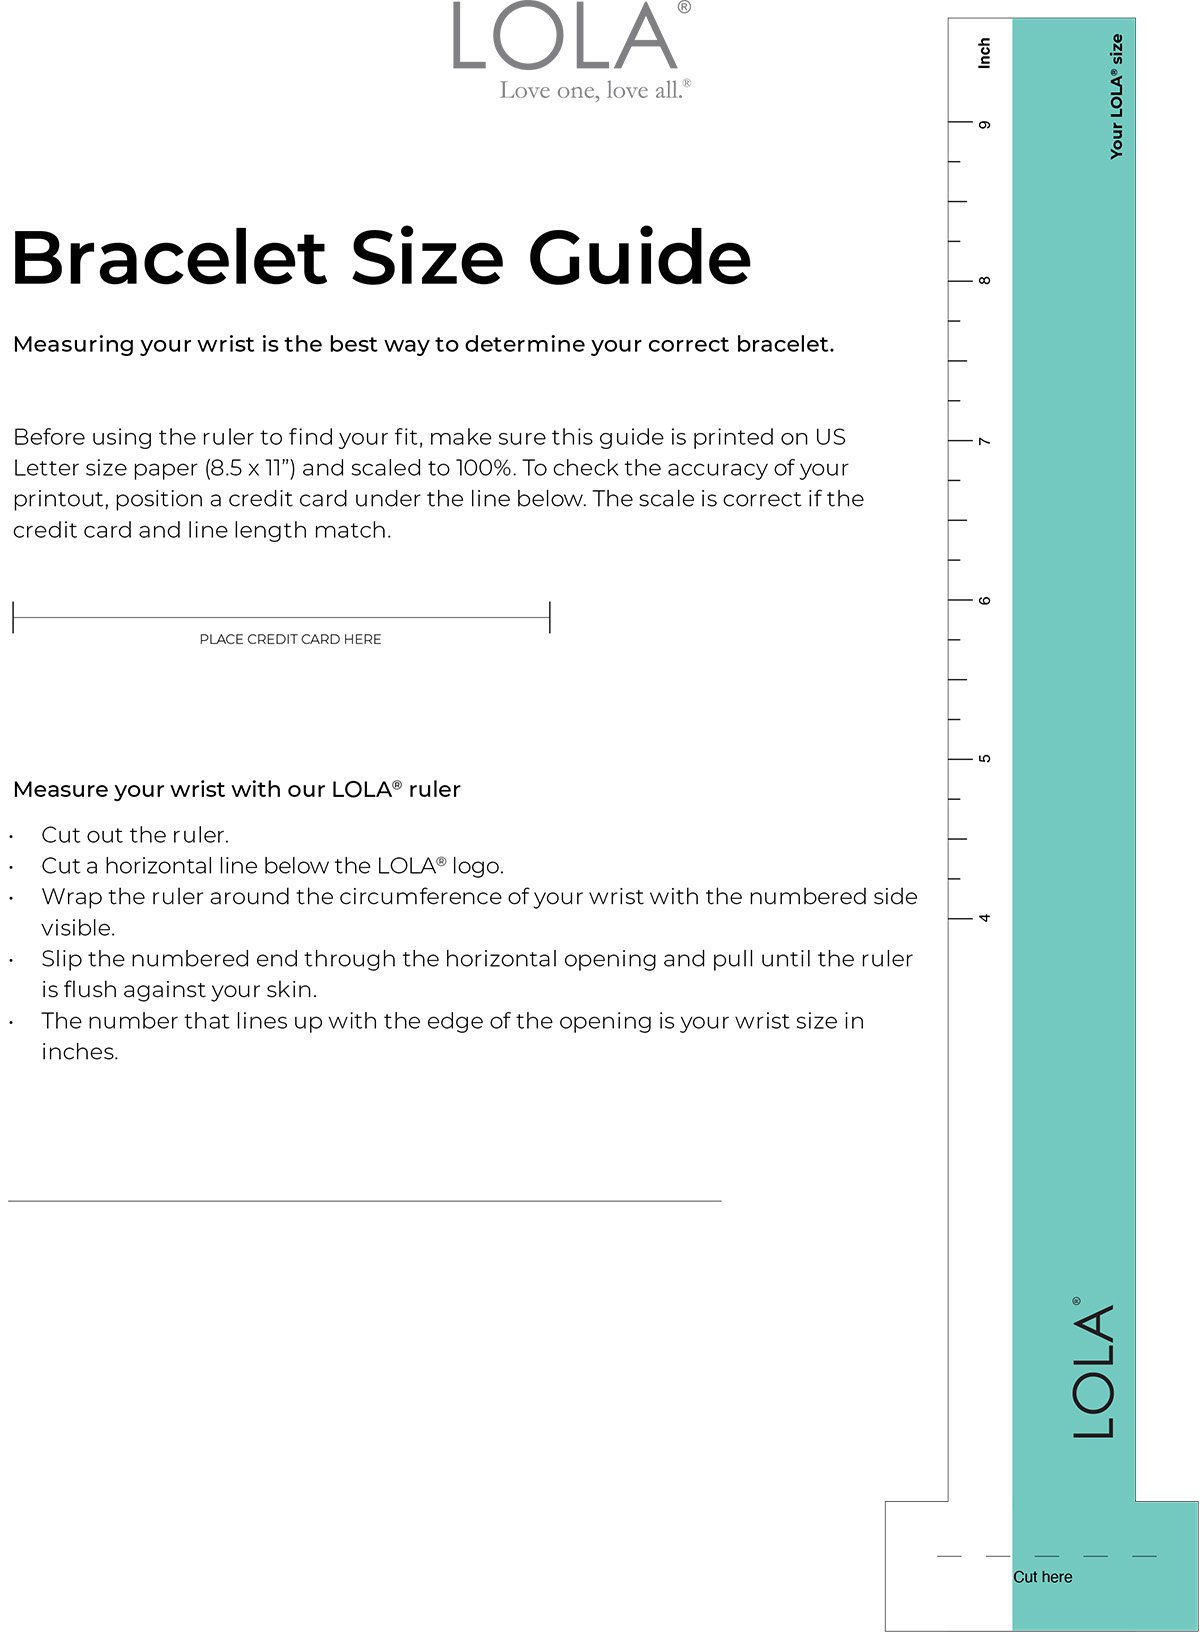 Bracelet size guide